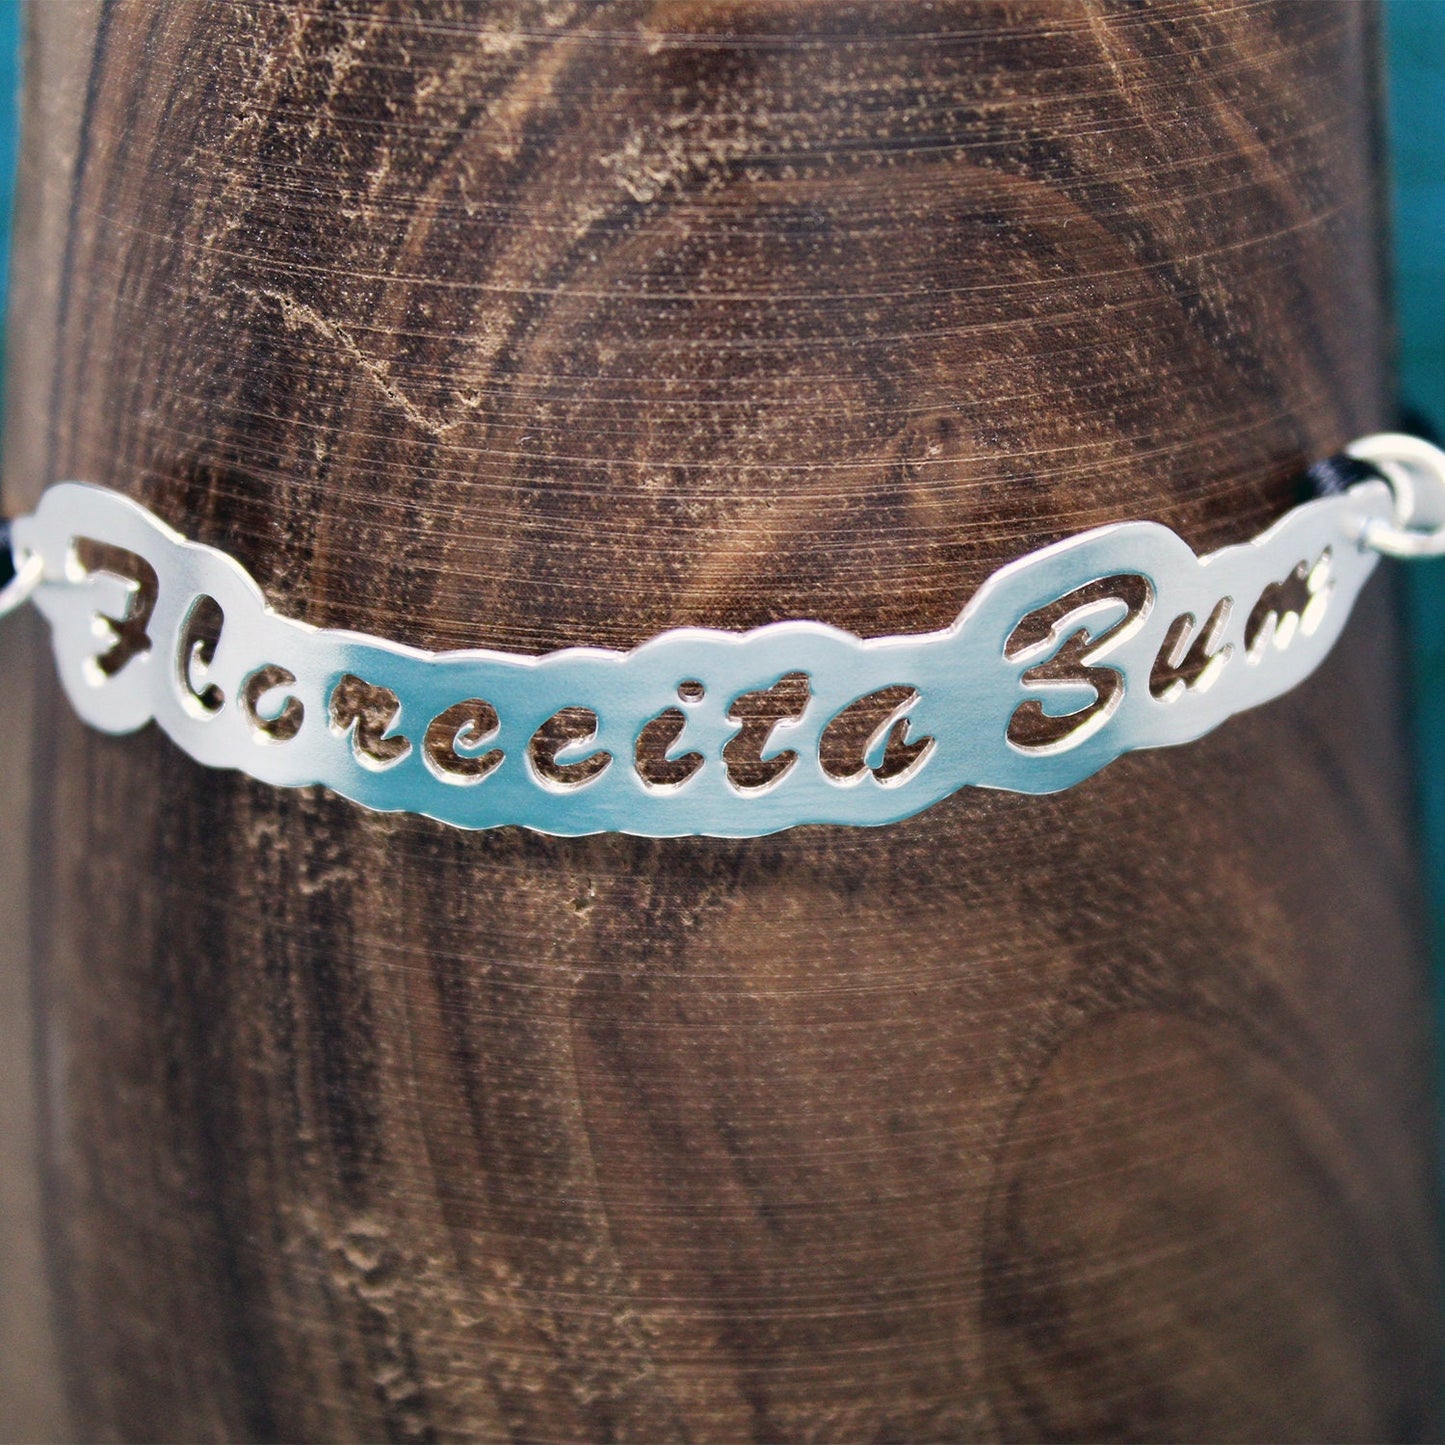 Florecita Bum bracelet in 925 silver.